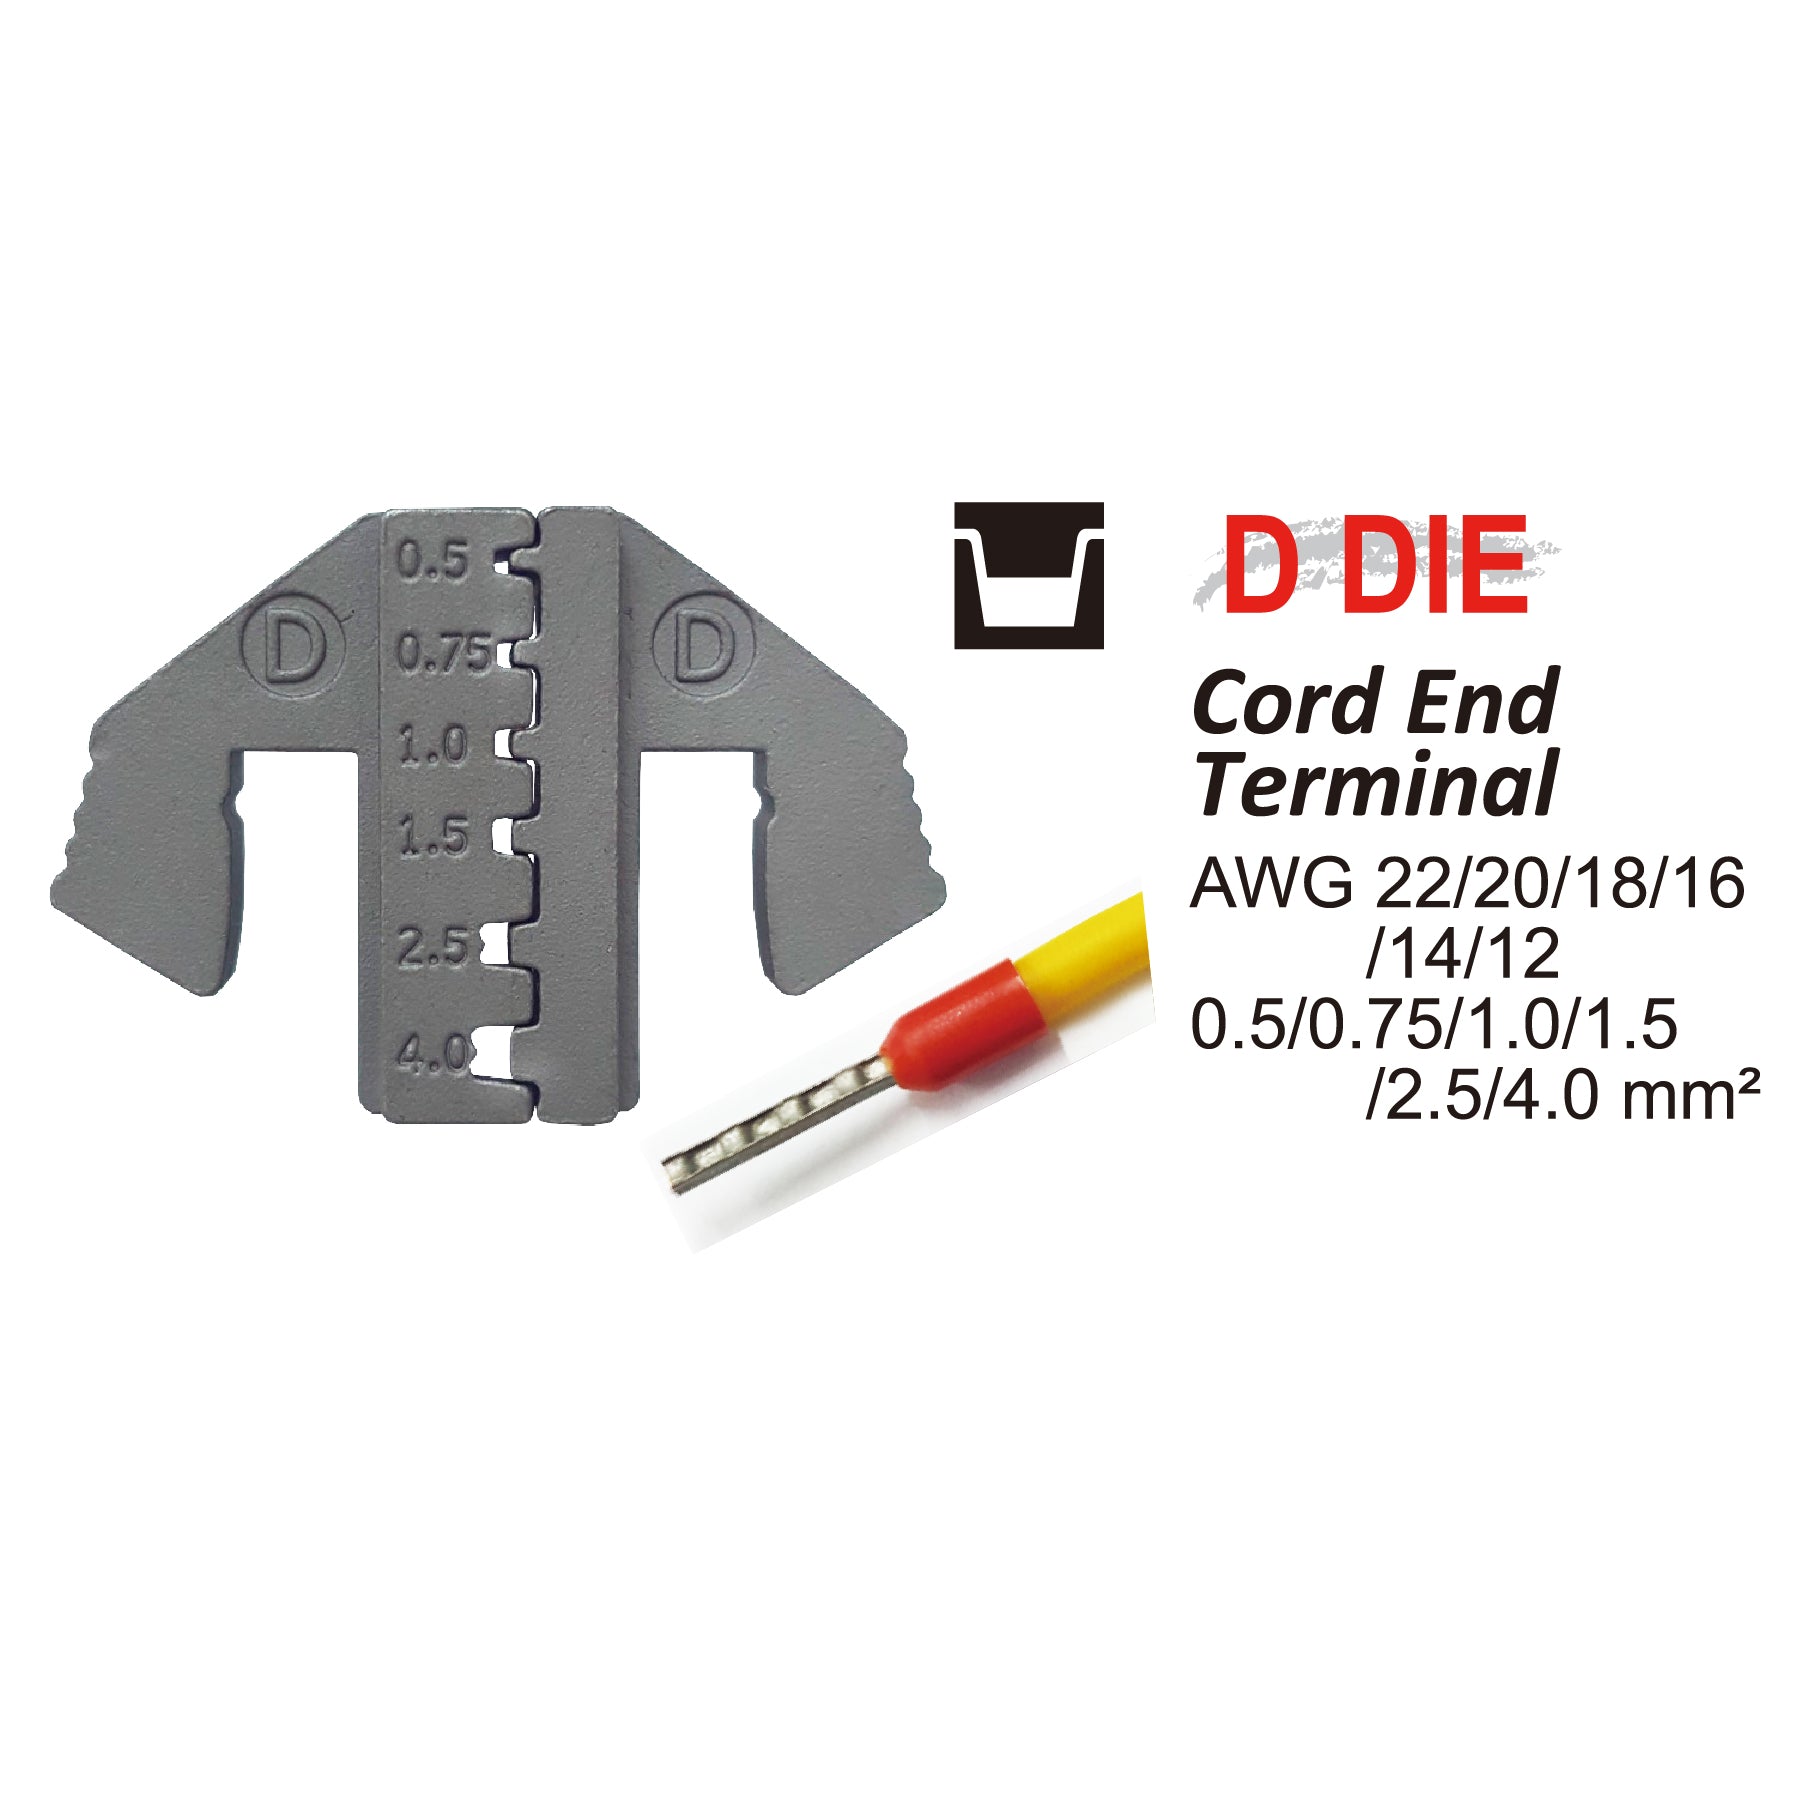 Crimping Tool Die - D Die for Cord End Terminals AWG 20/18/17/16/14/12